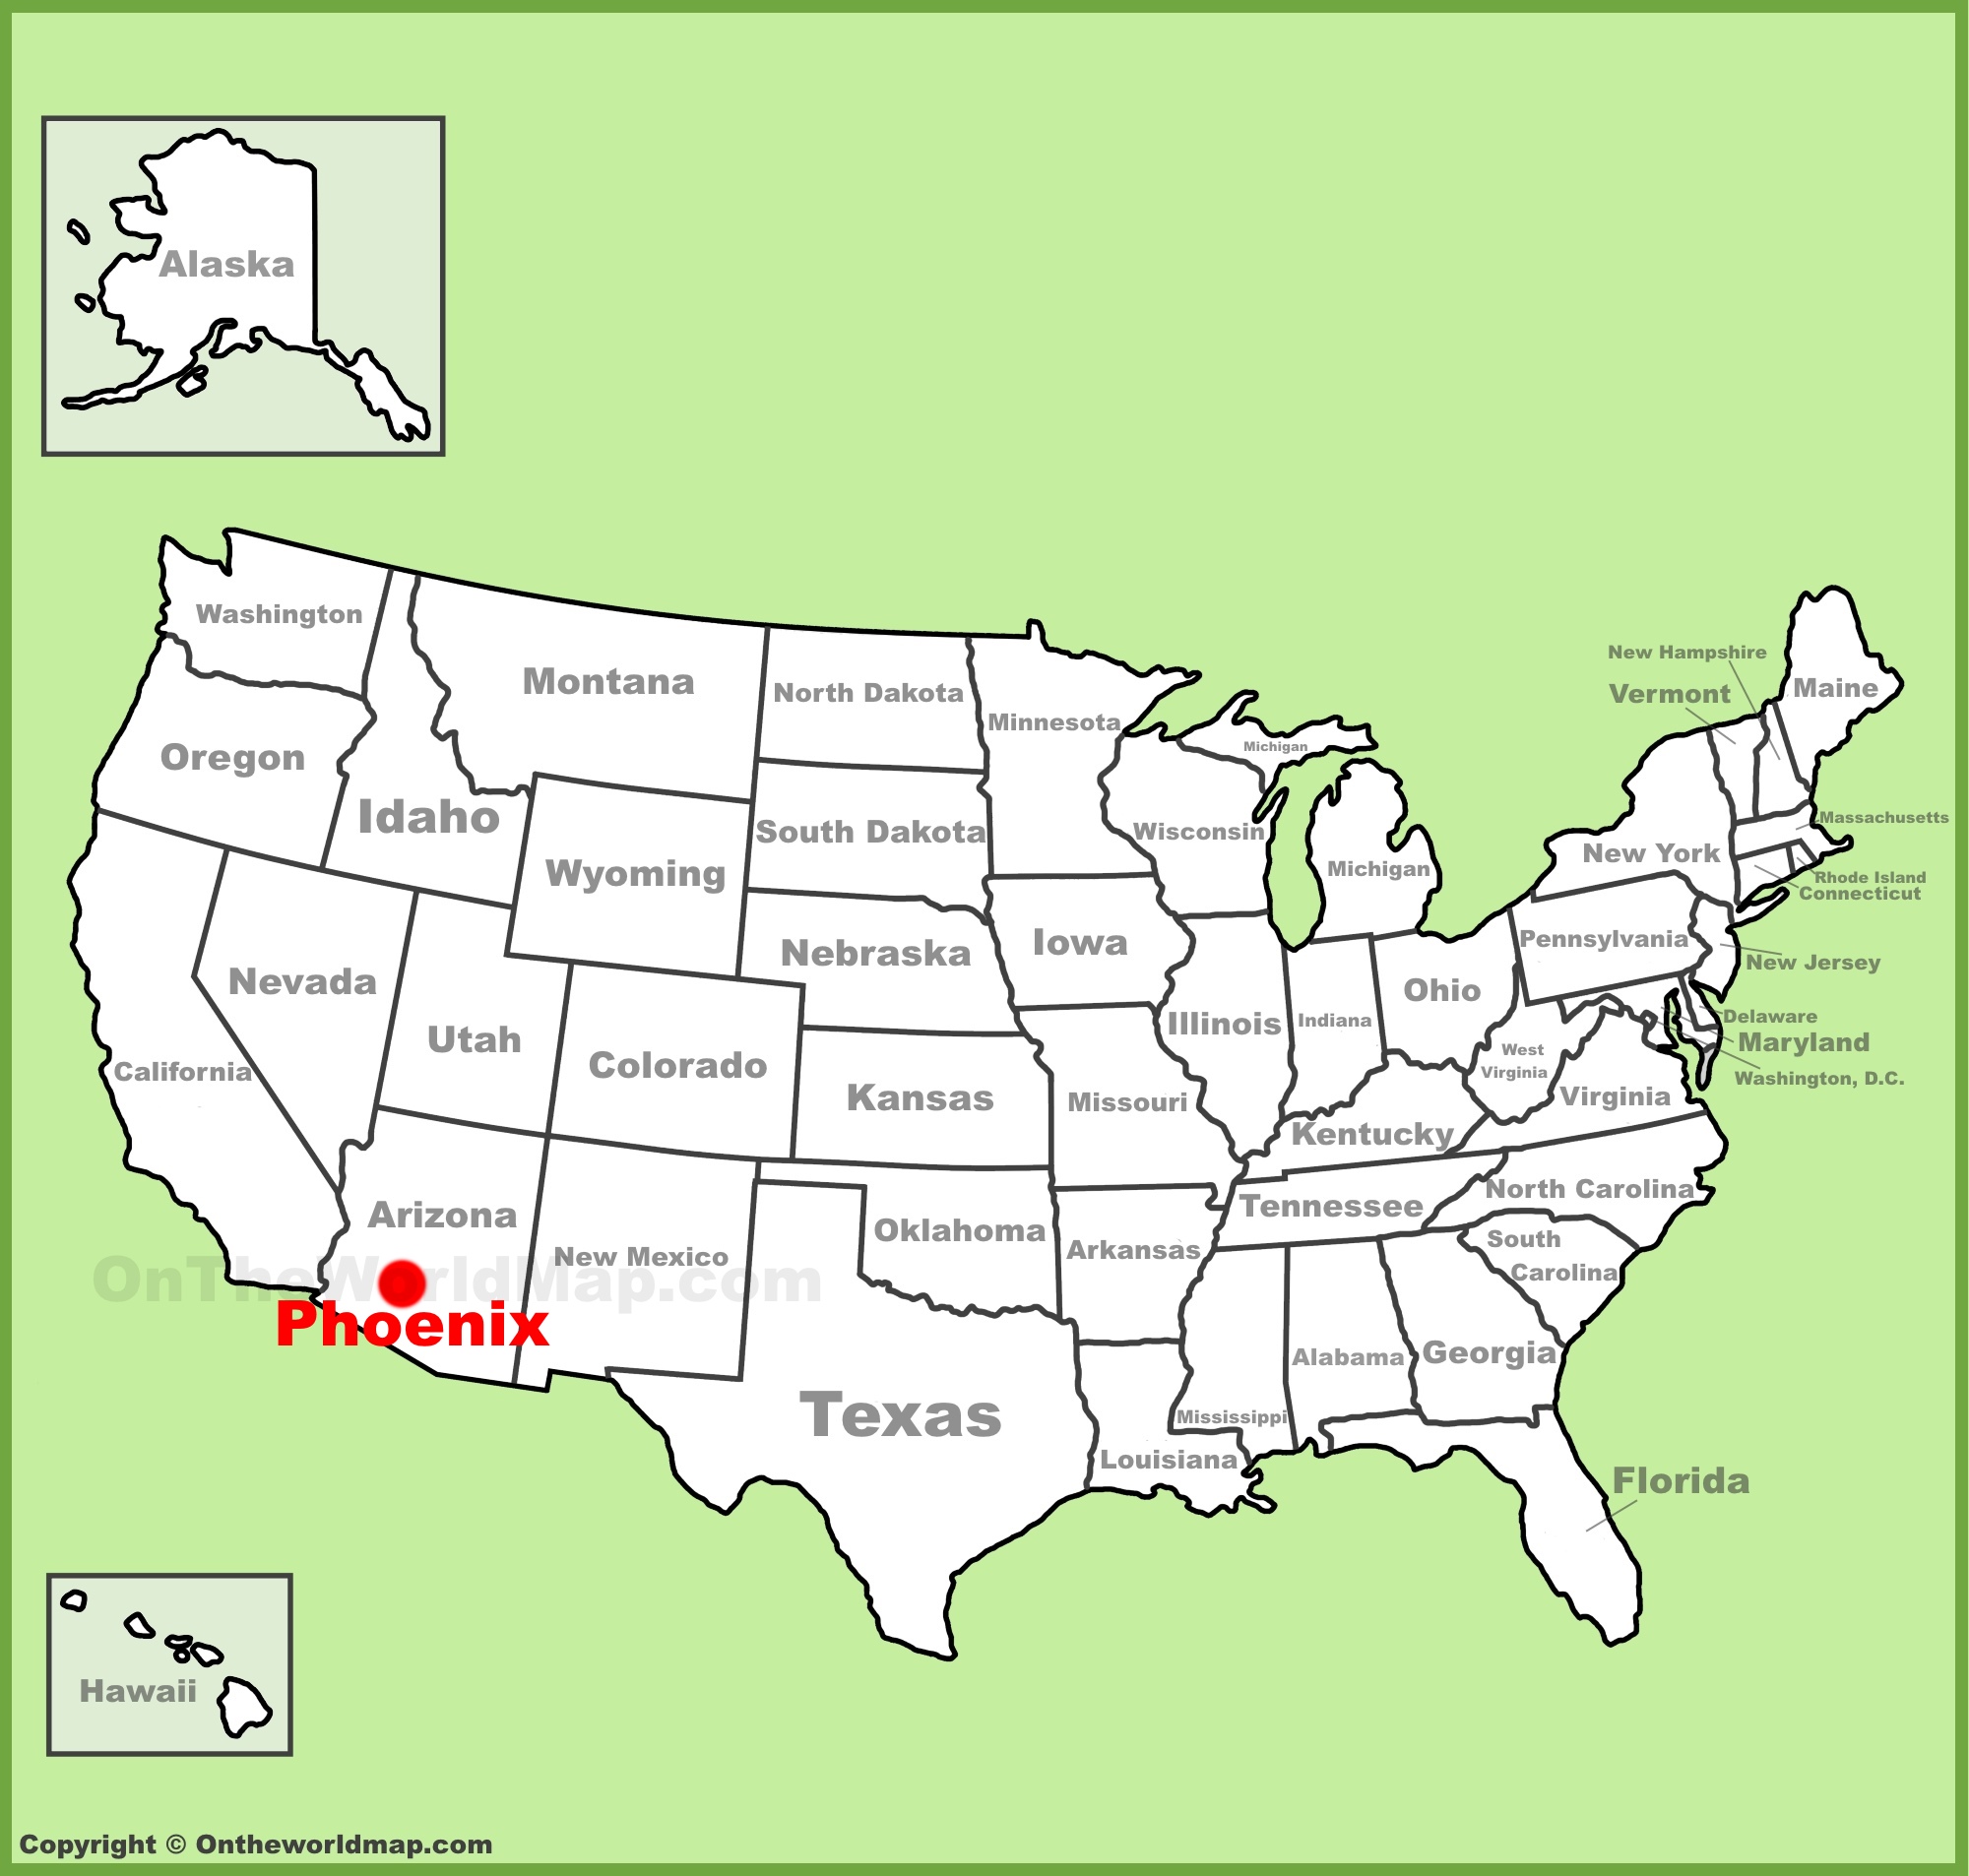 Phoenix Location On The U S Map